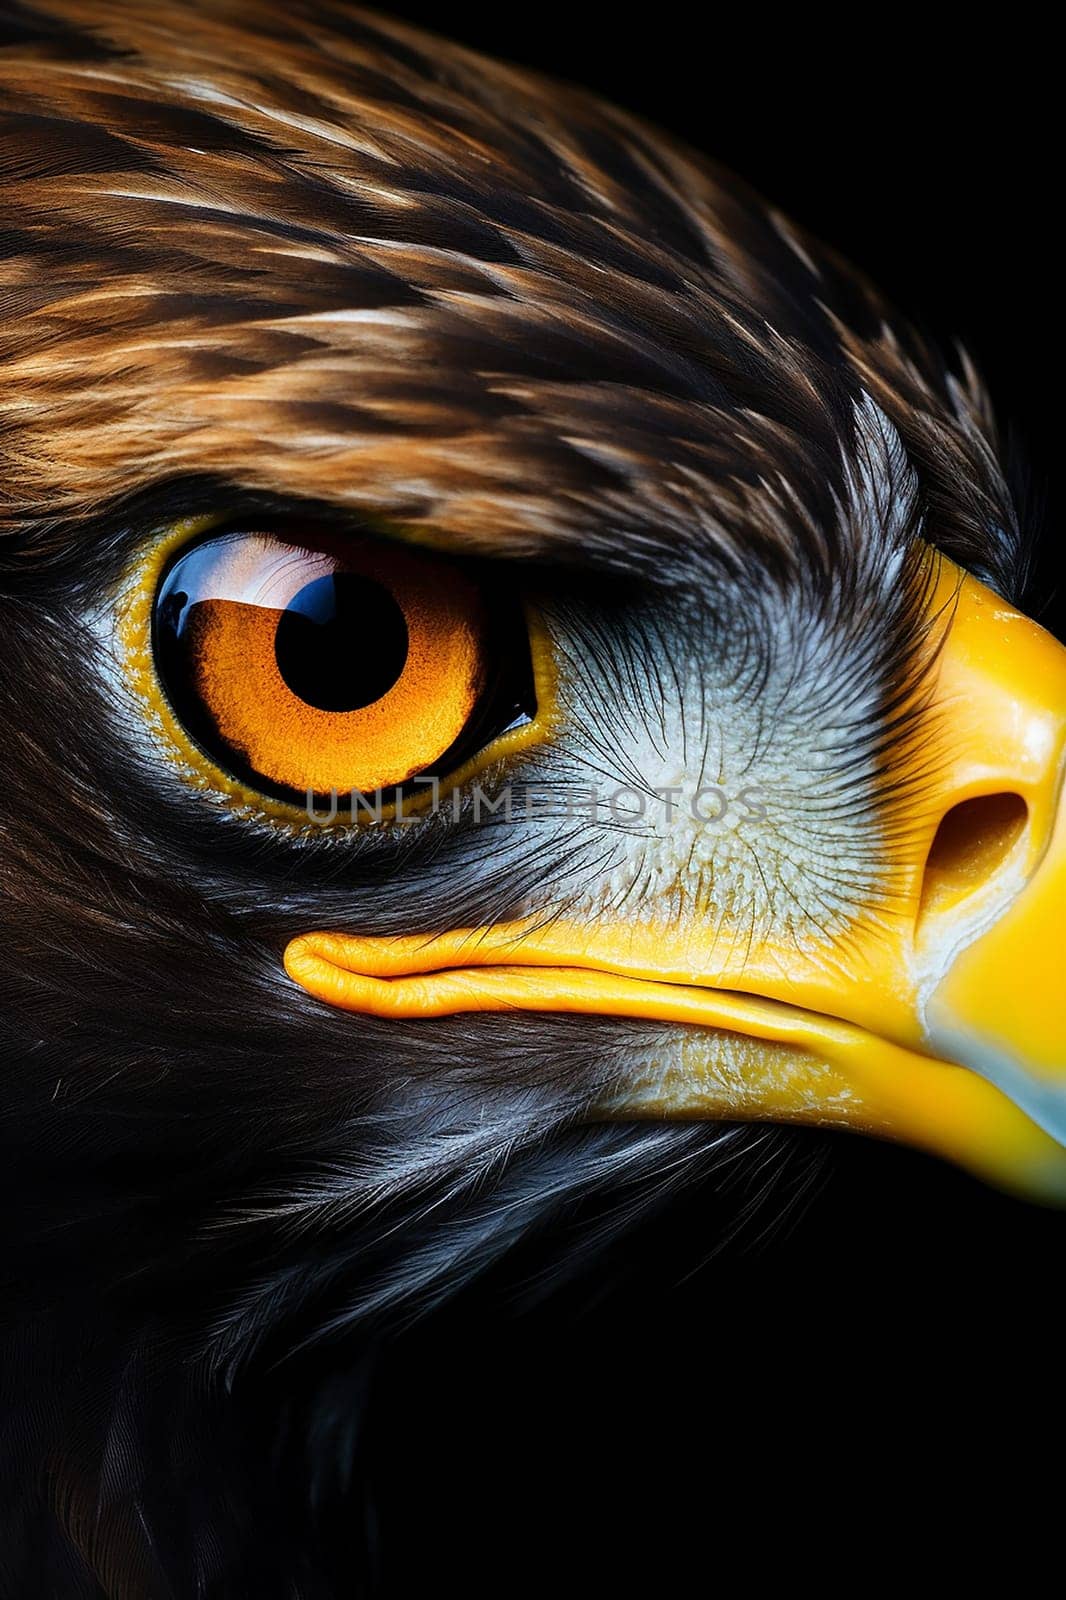 A Majestic american bald eagle closeup by Hype2art